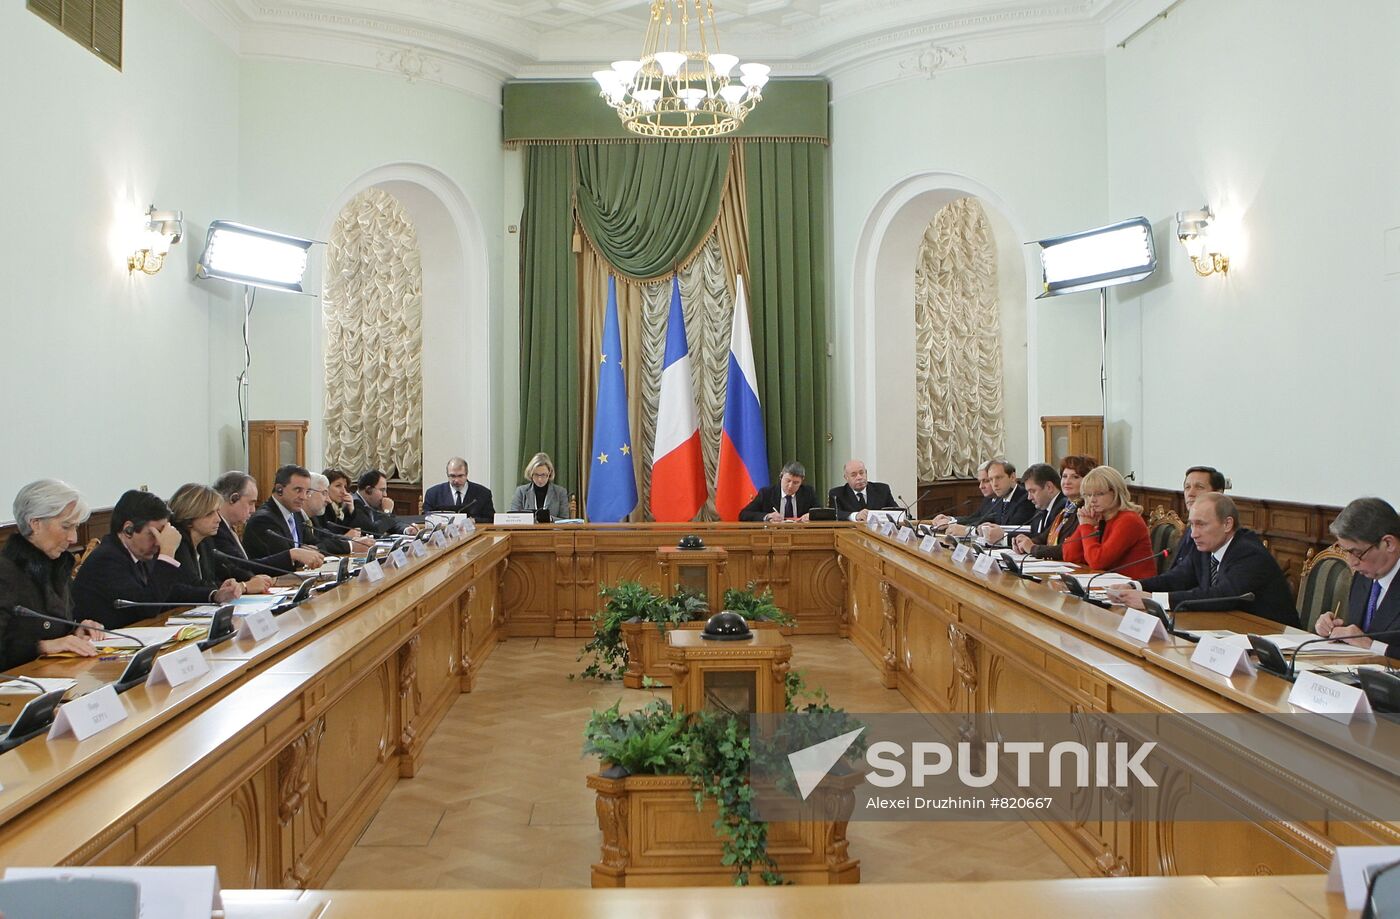 Vladimir Putin, Francois Fillon take part in a meeting